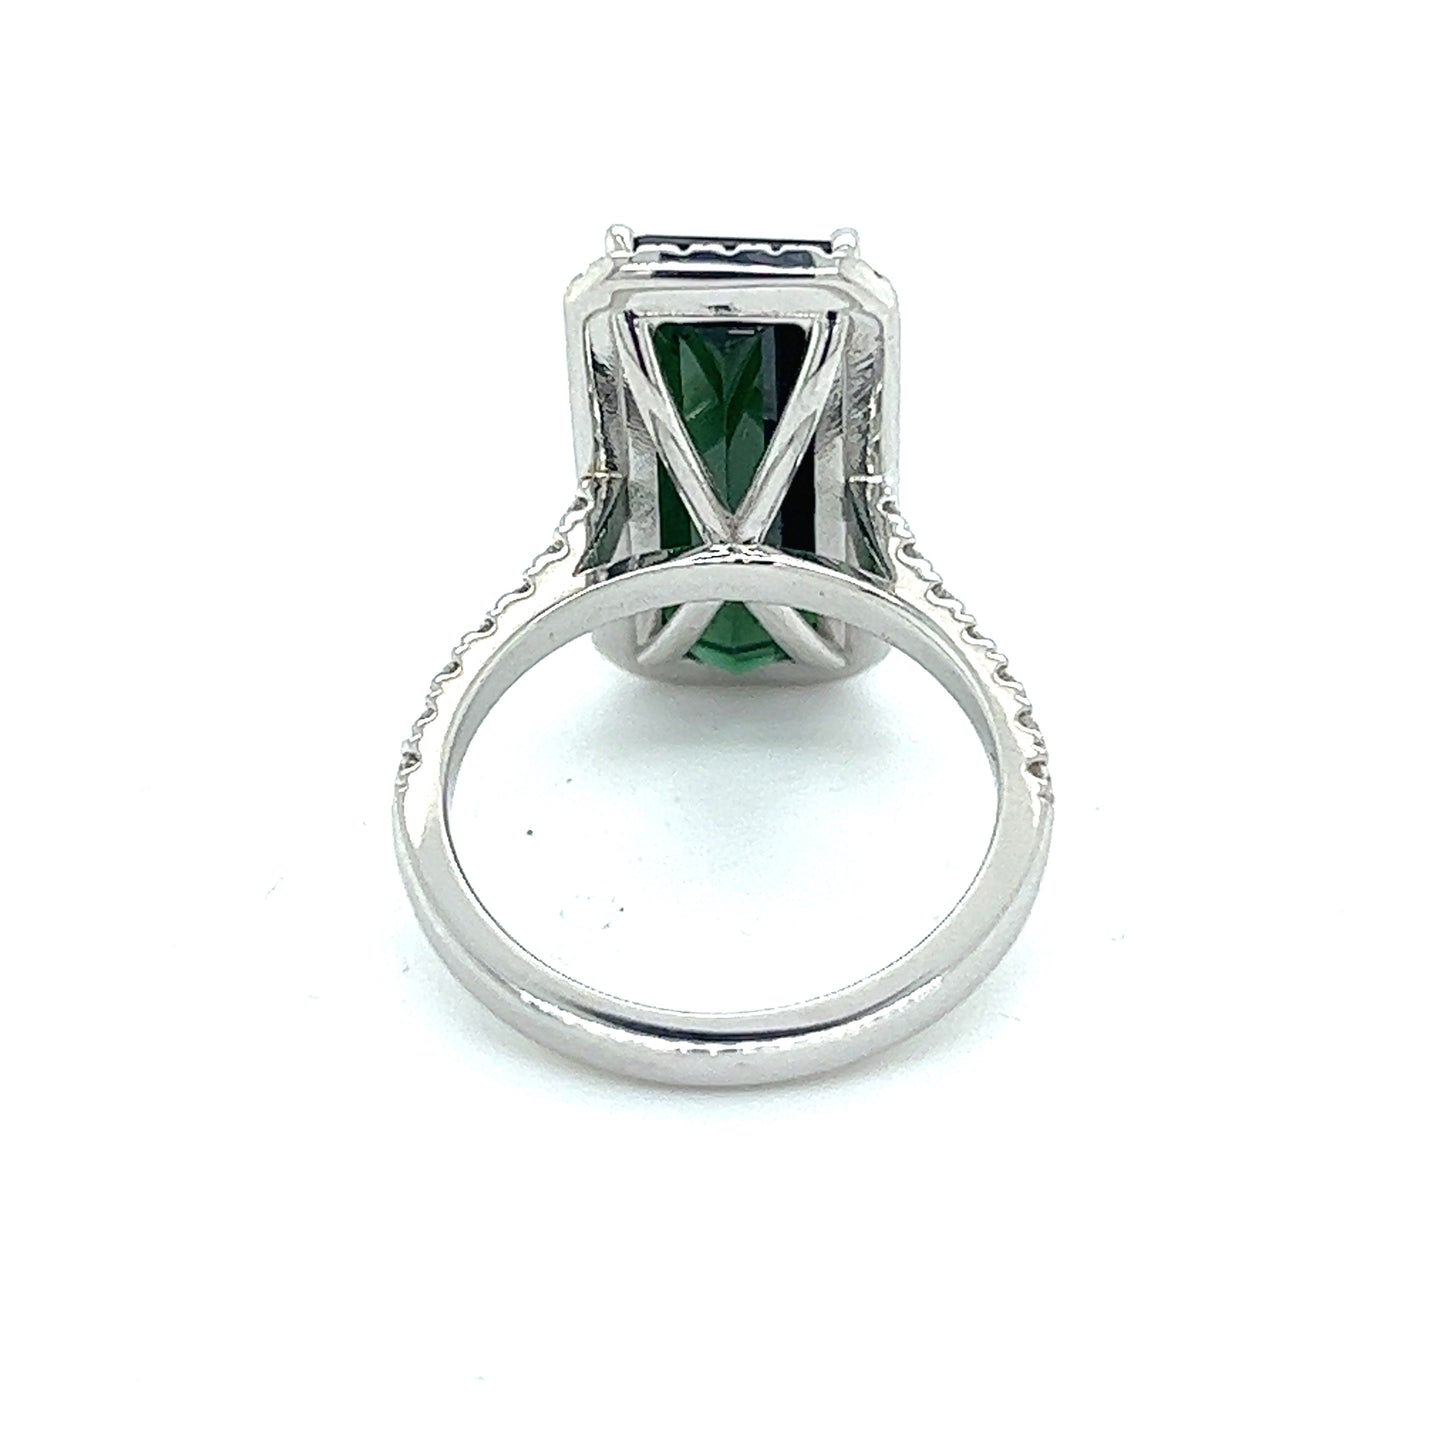 Natural Tourmaline Diamond Ring Size 6.25 14k W Gold 5.57 TCW Certified $5,975 216660 - Certified Fine Jewelry